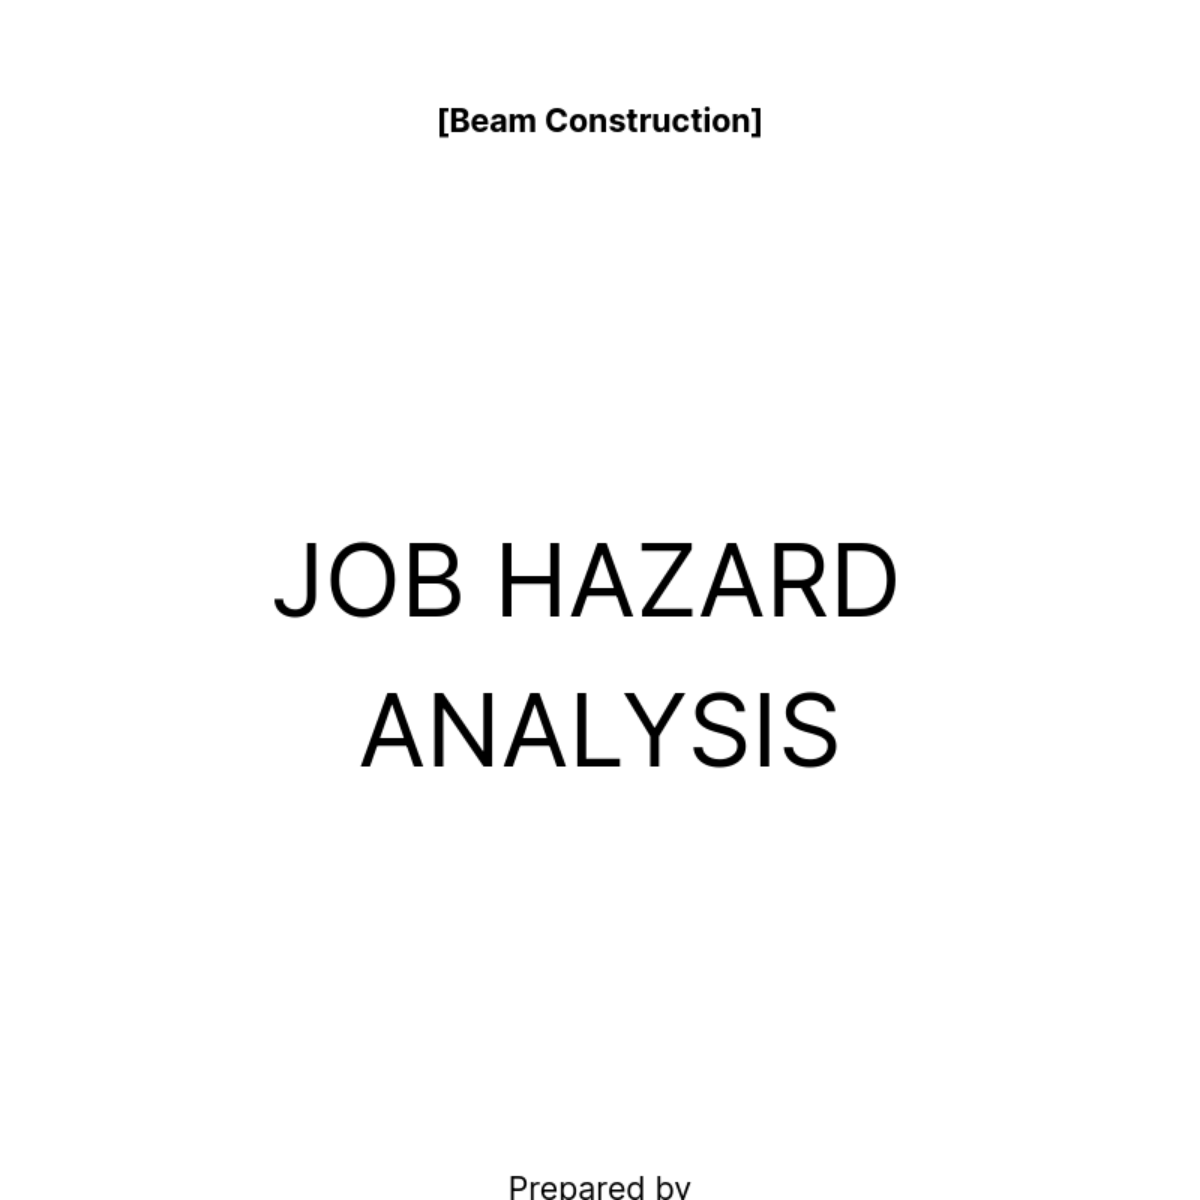 Job Hazard Analysis Template